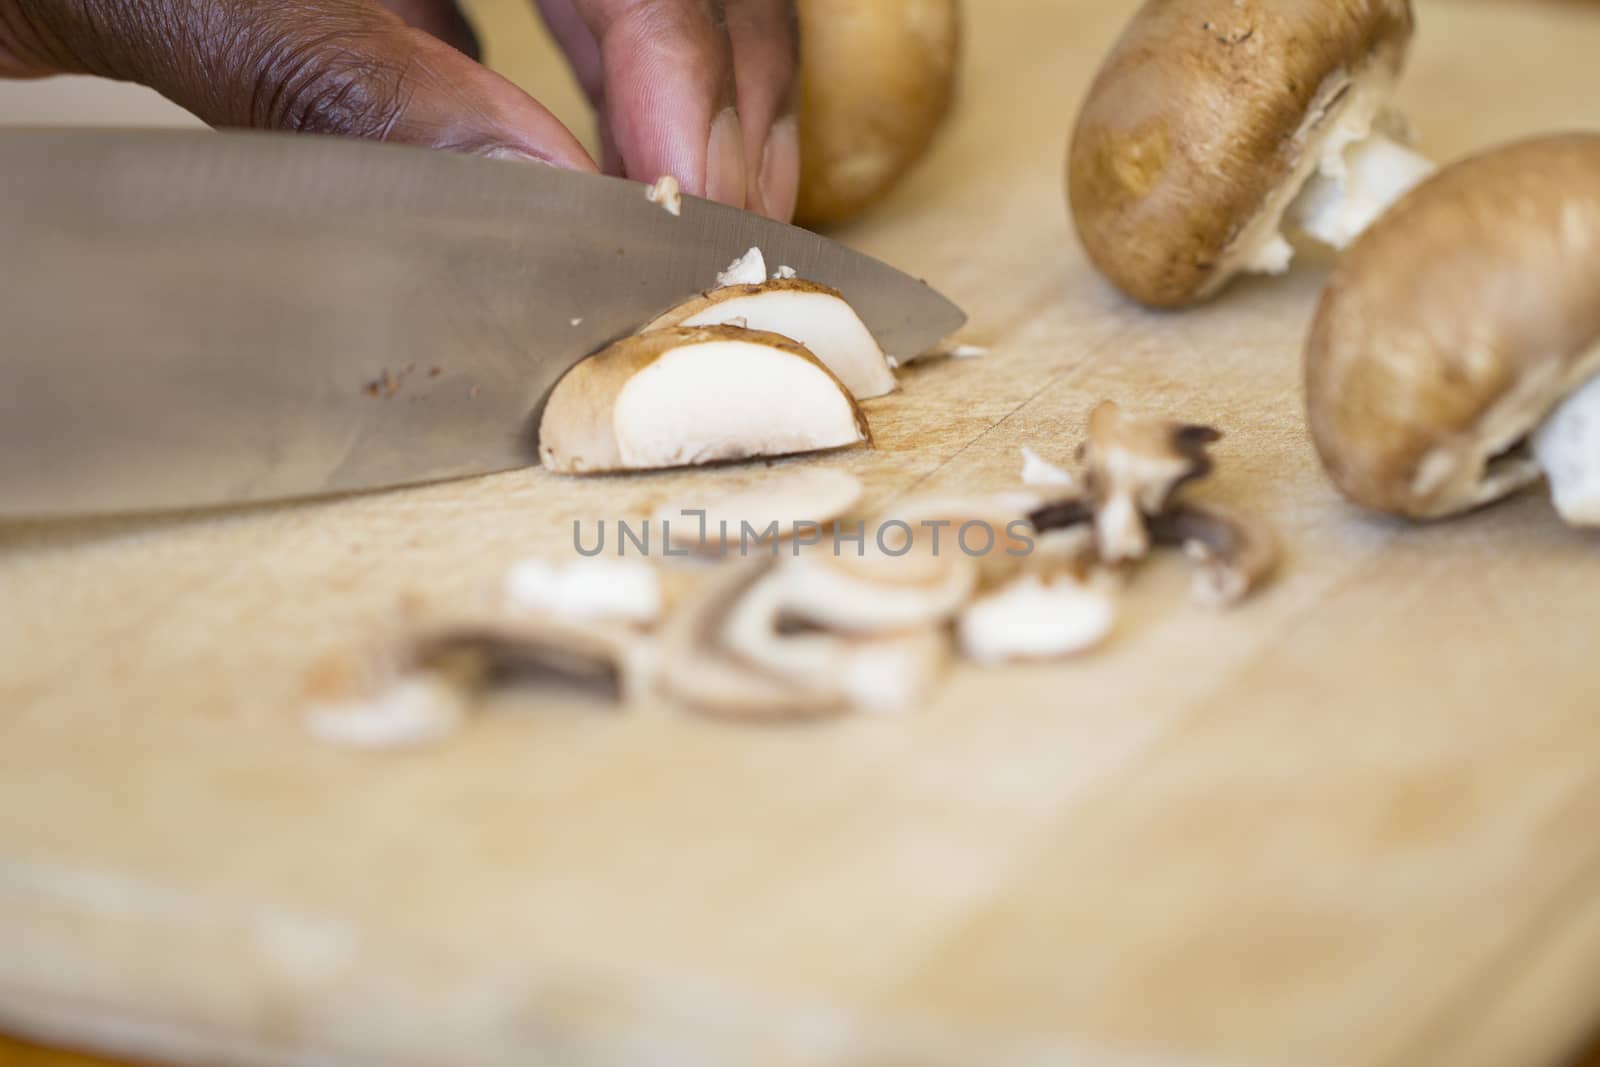 Black Man chopping Cremini mushrooms by magicbones